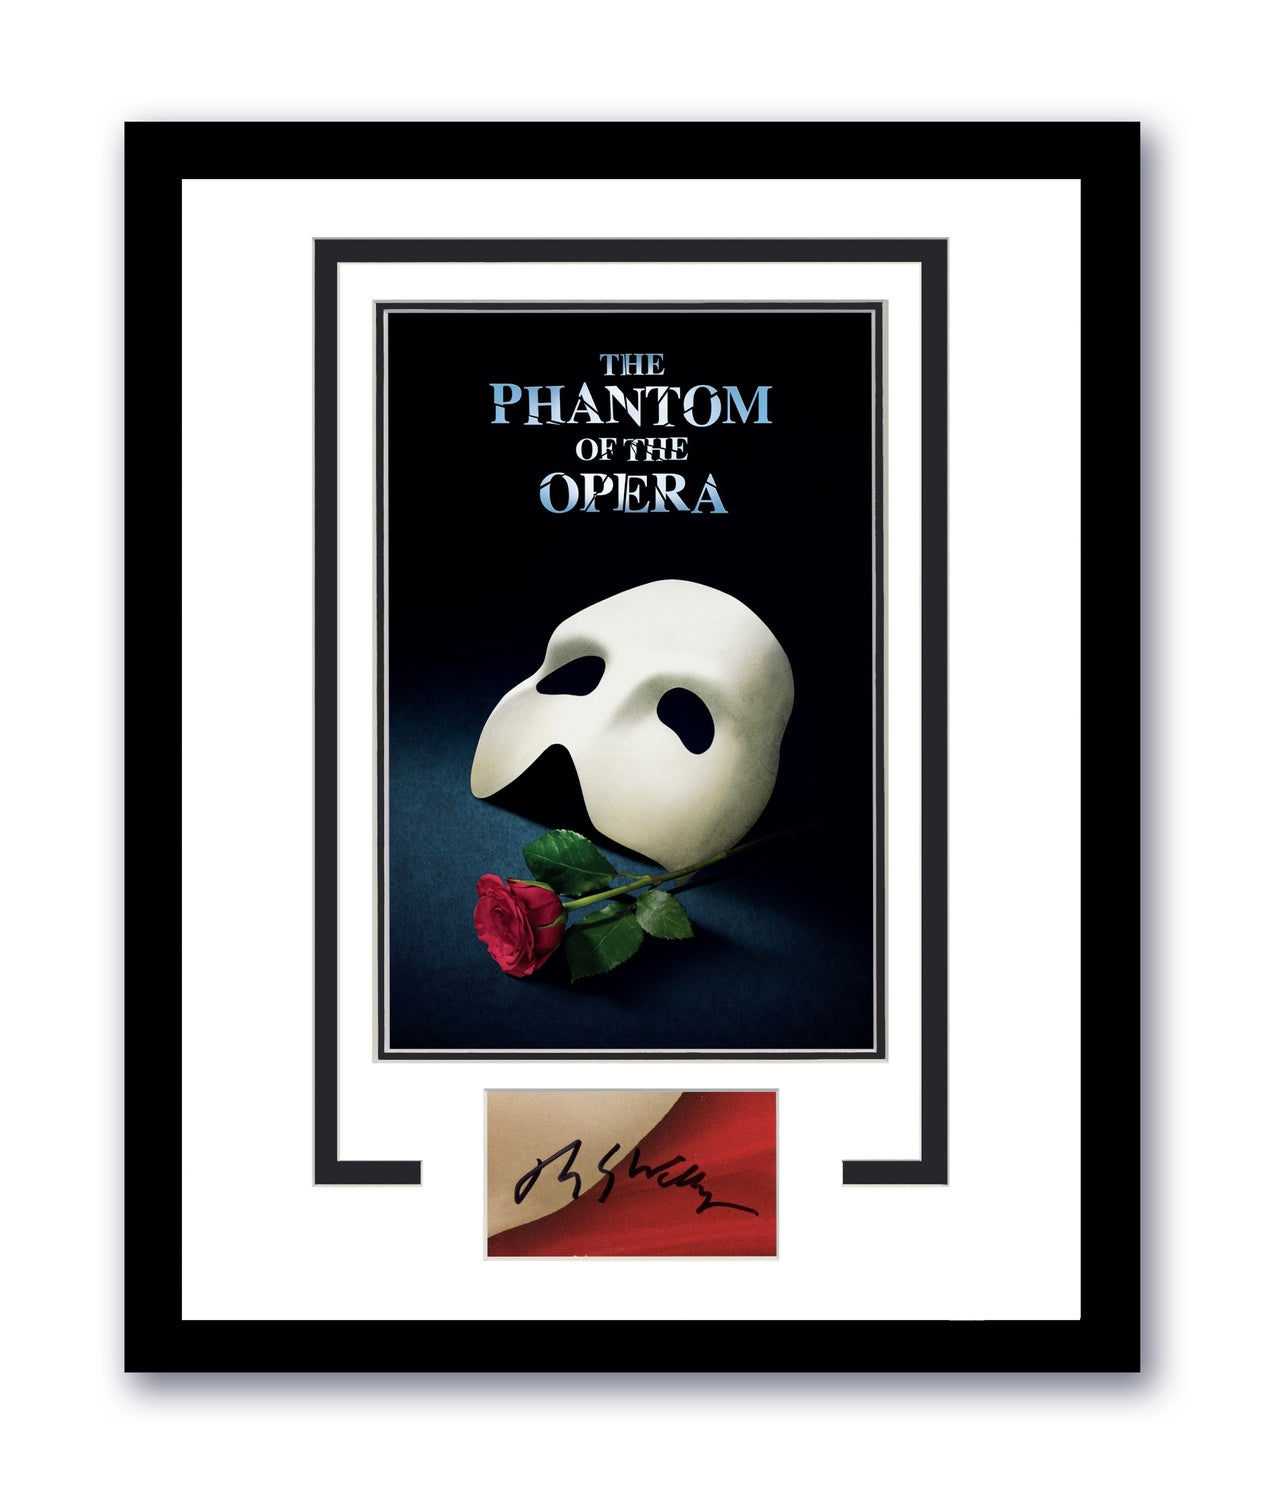 Andrew Lloyd Webber Autographed Signed 11x14 Framed Phantom ACOA